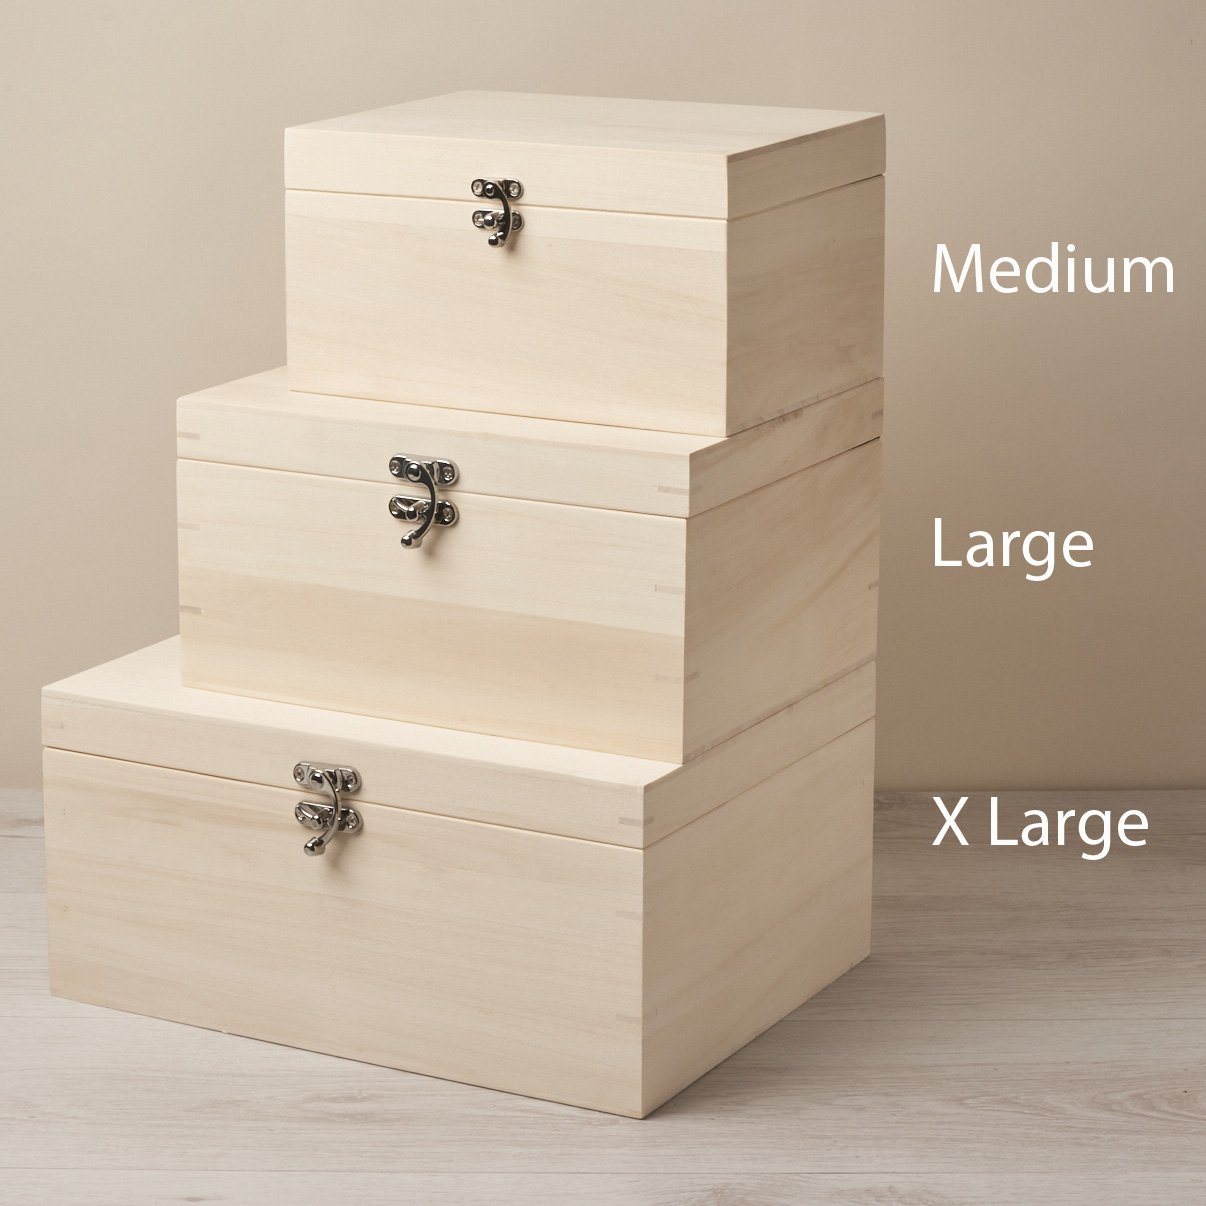 Christening Box - Laser Engraved Wooden Memory Keepsake Box With Hinged Lid - 18 Design